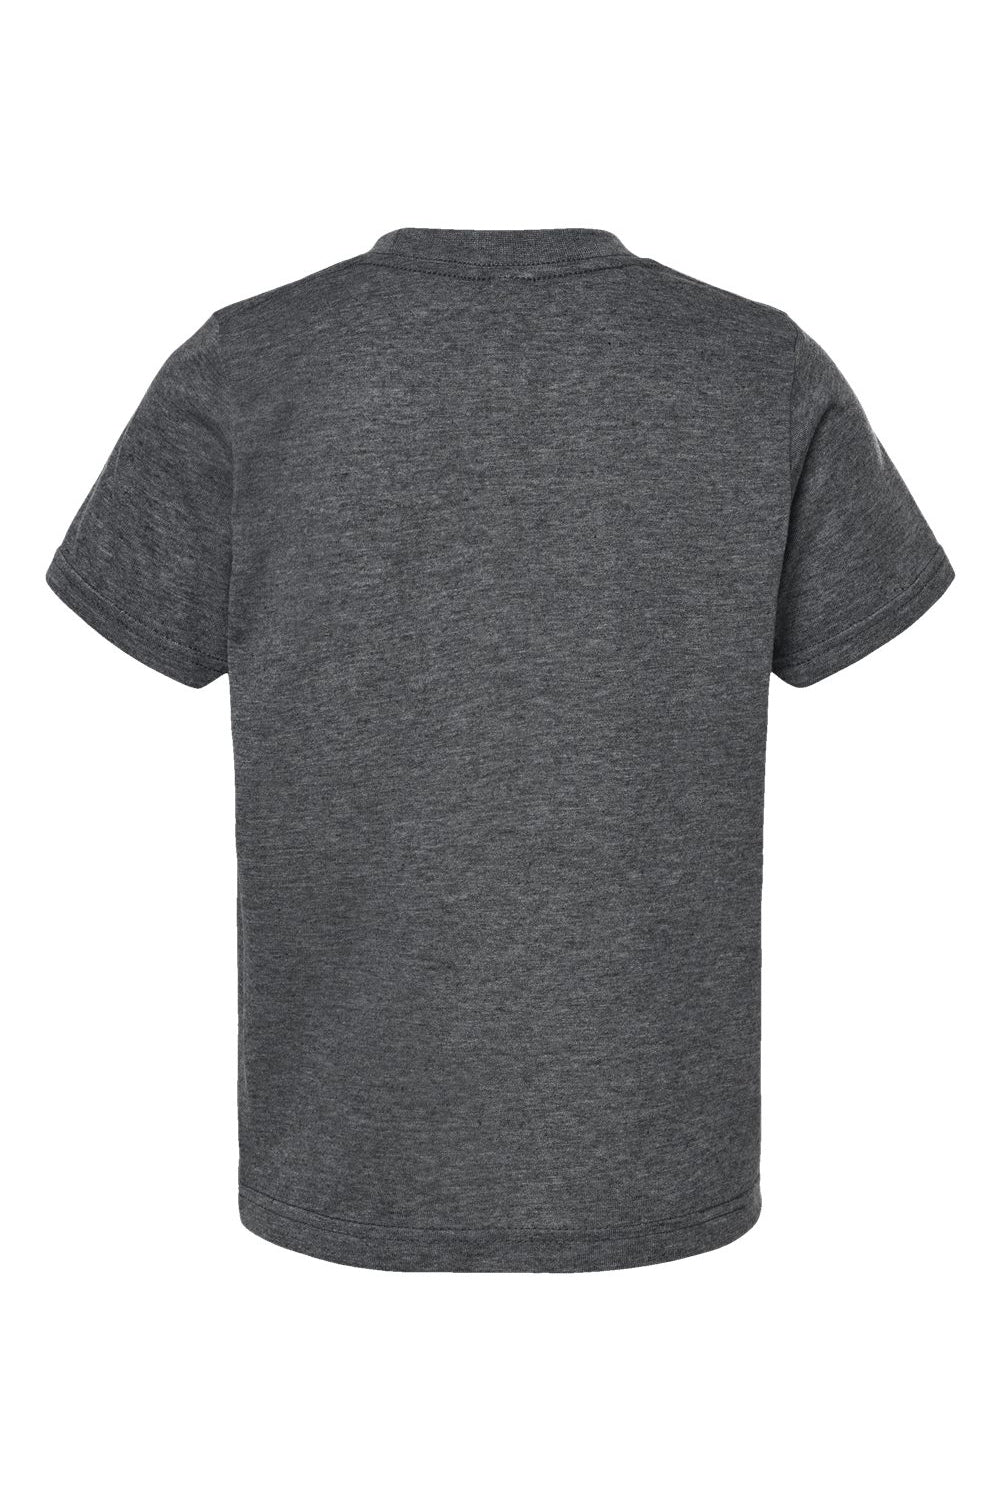 Tultex 265 Youth Poly-Rich Short Sleeve Crewneck T-Shirt Heather Charcoal Grey Flat Back